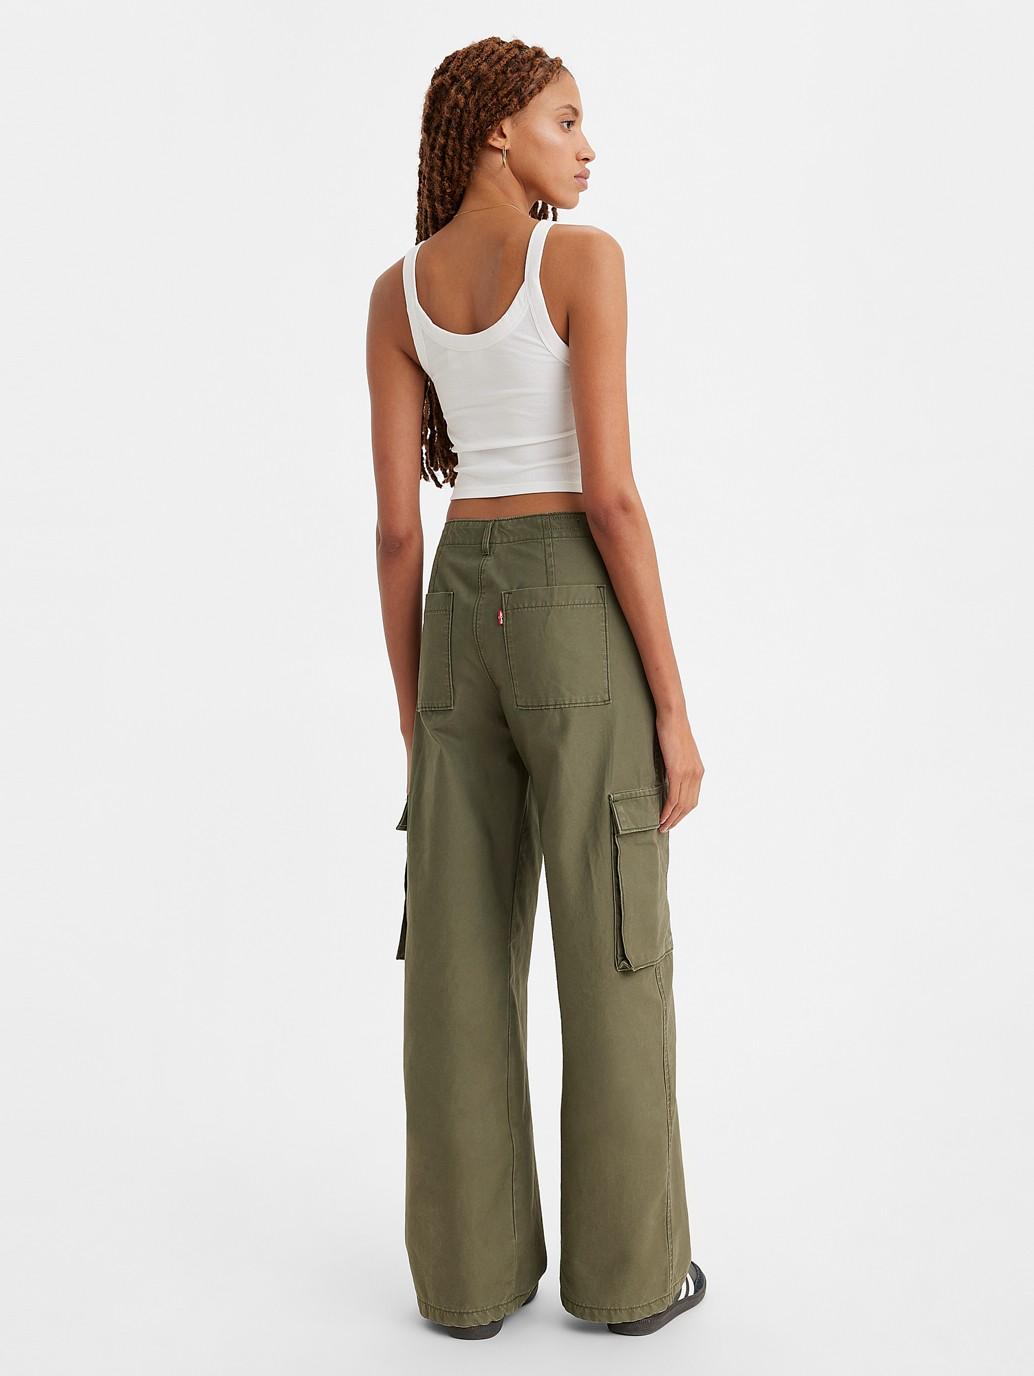 Buy Levi's® Women's Baggy Cargo Pants| Levi’s® Official Online Store PH